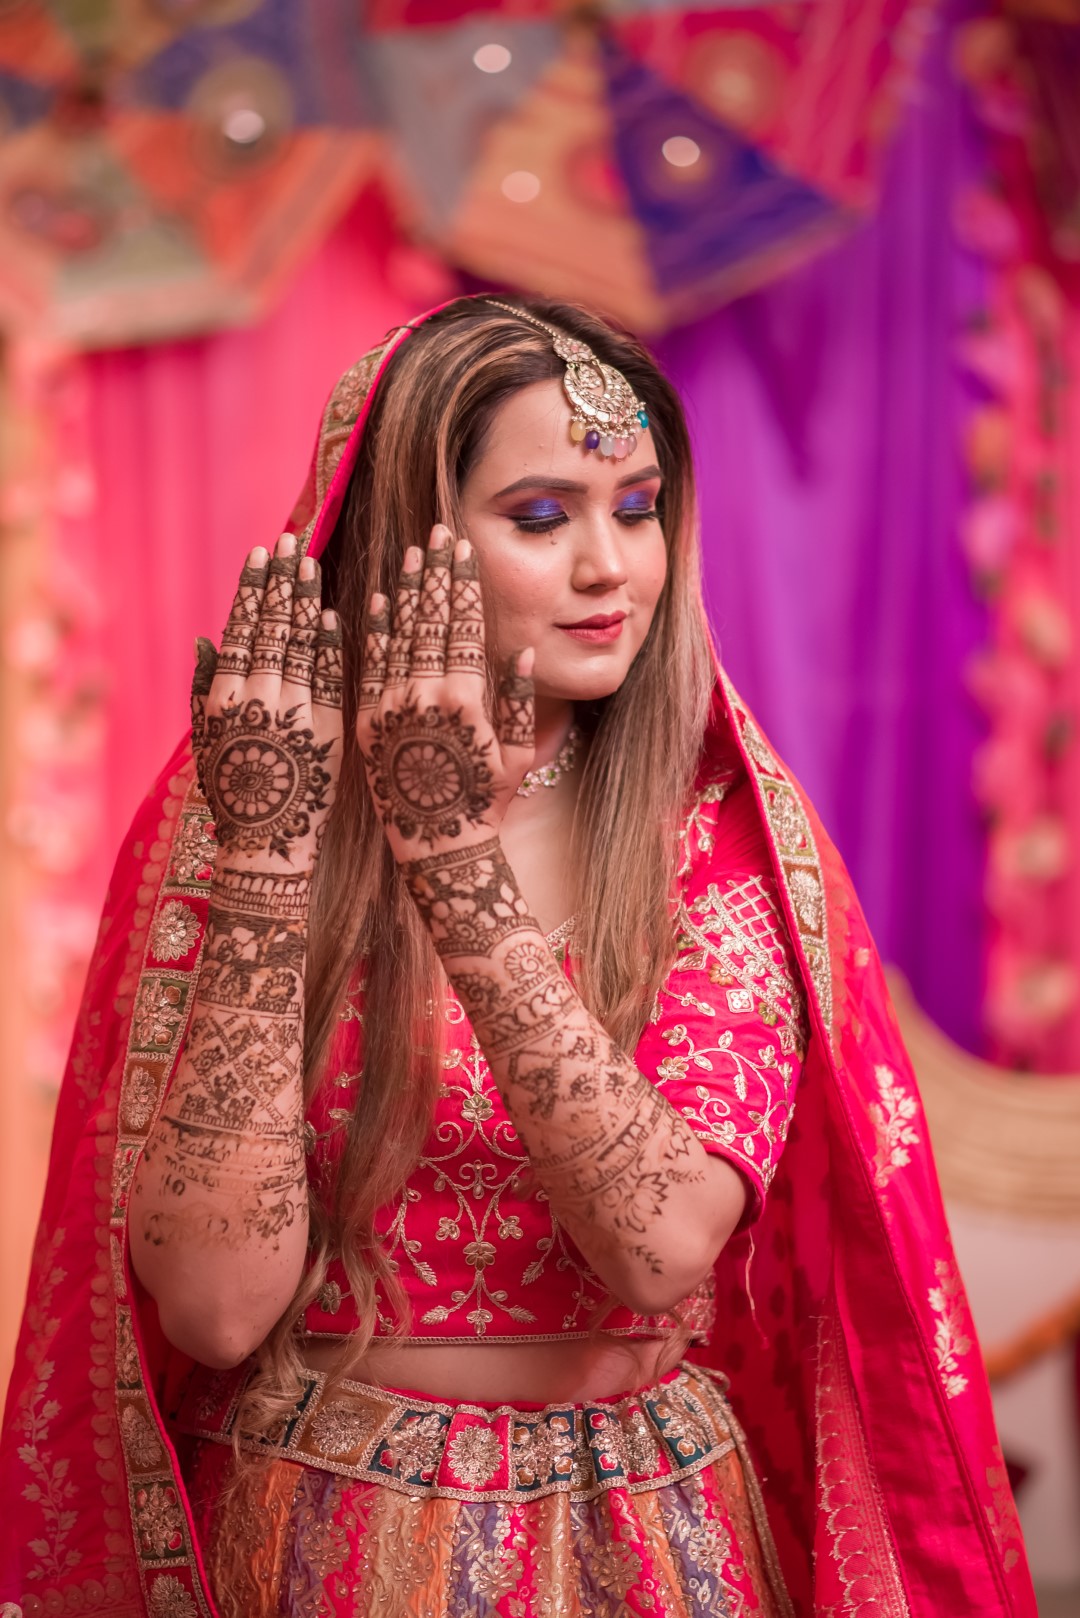 Muslim Bride - Photoshoot - Jyotimoy Photography